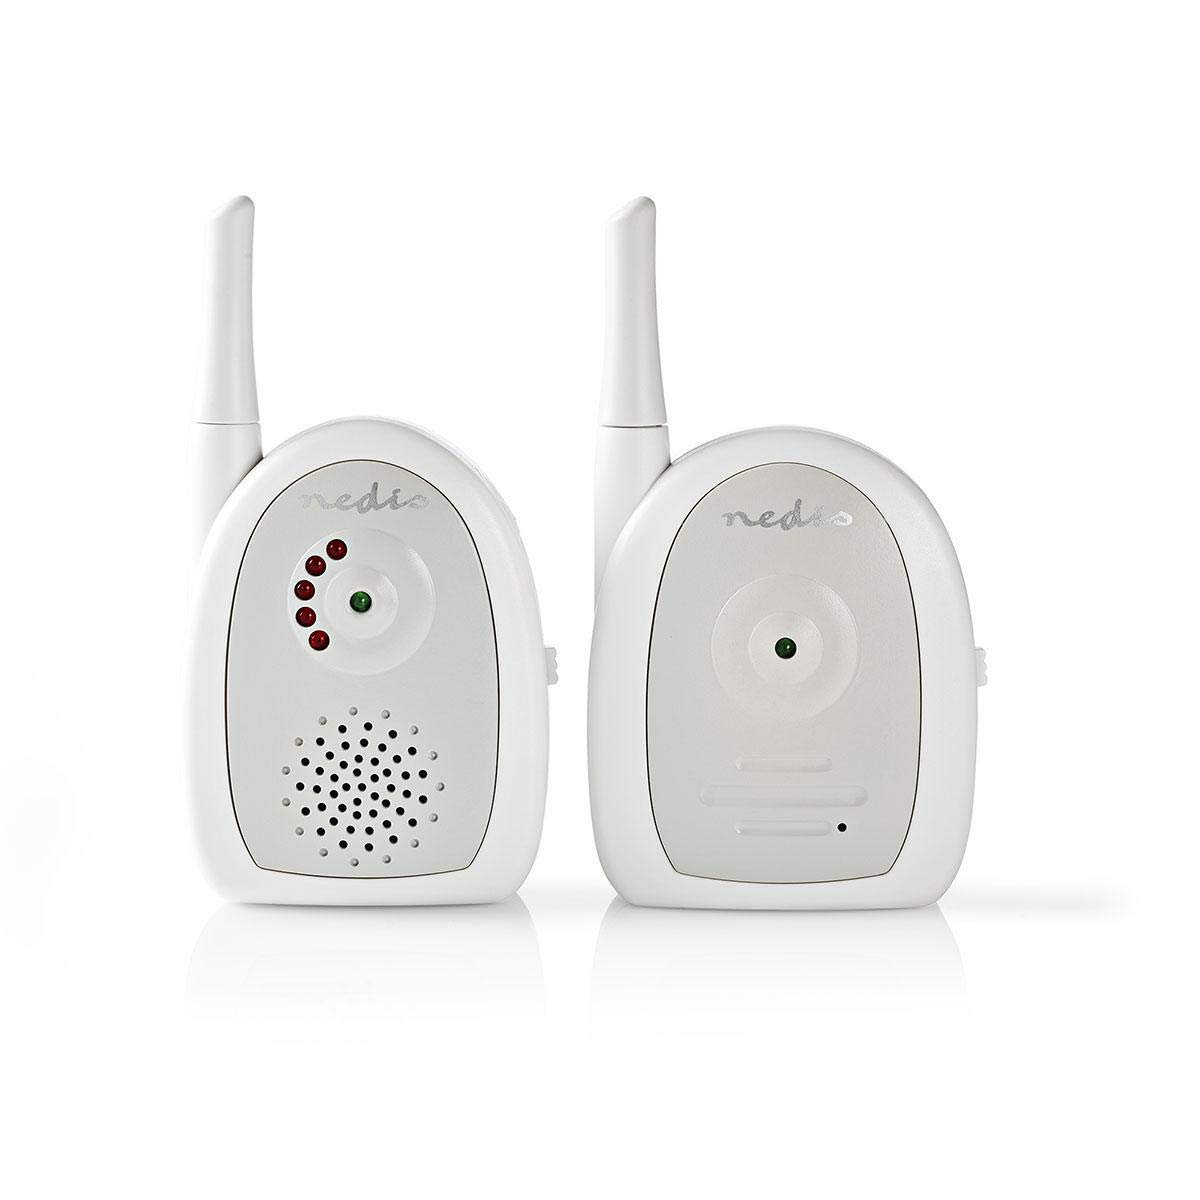 Nedis Audio-Baby-Monitor - Babyphone - FHSS - Rückruffunktion - 300 m - Batteriebetrieben/Netzstromversorgung - 6X AAA NiMH/HR03 - ABS - Weiss/Grau